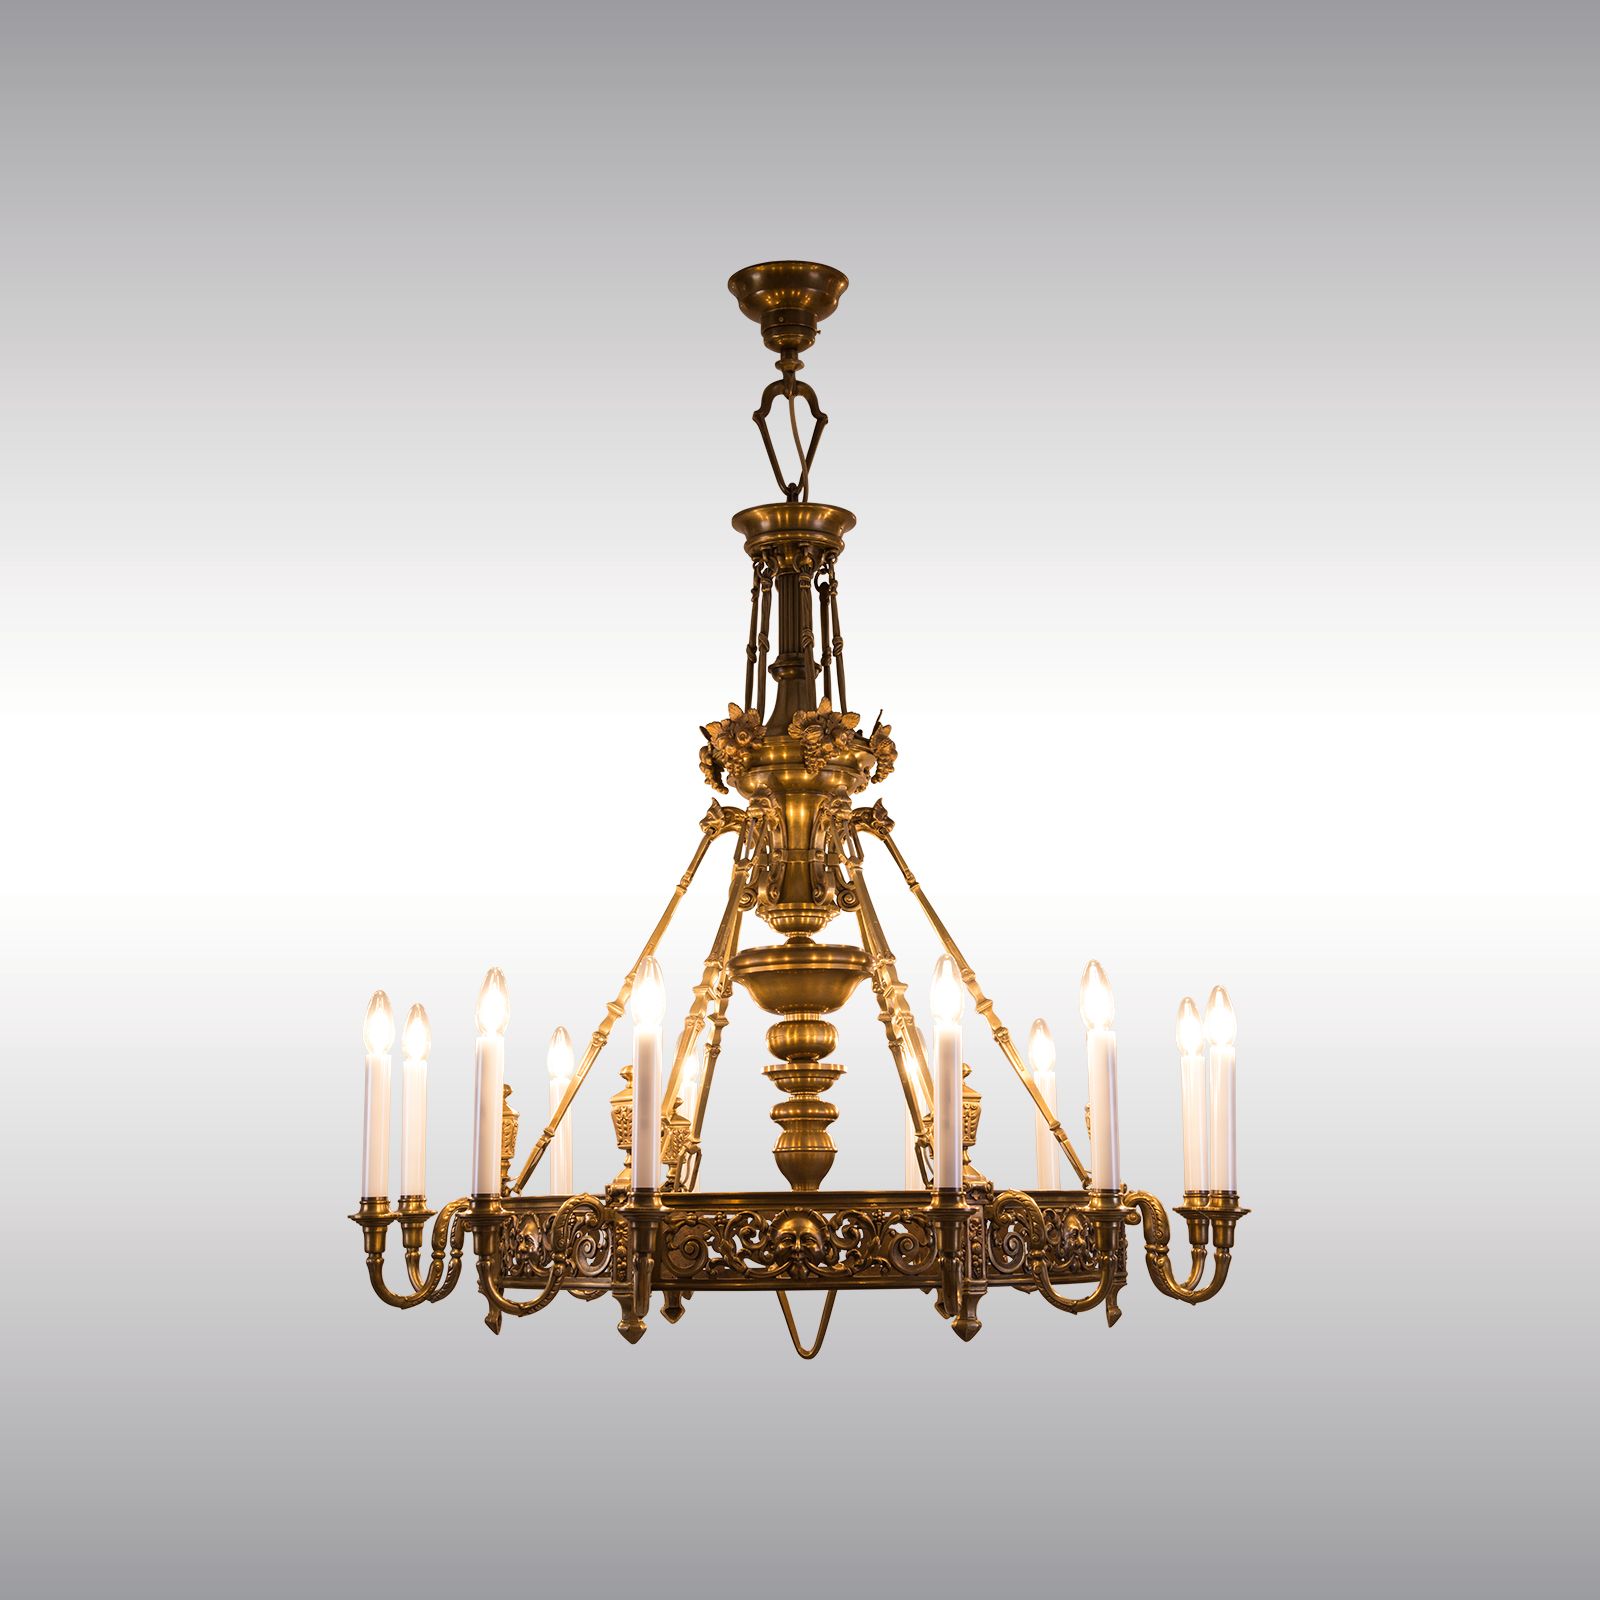 WOKA LAMPS VIENNA - OrderNr.: 50142|Historistic Chandelier - Design: Austrian Mastercraft